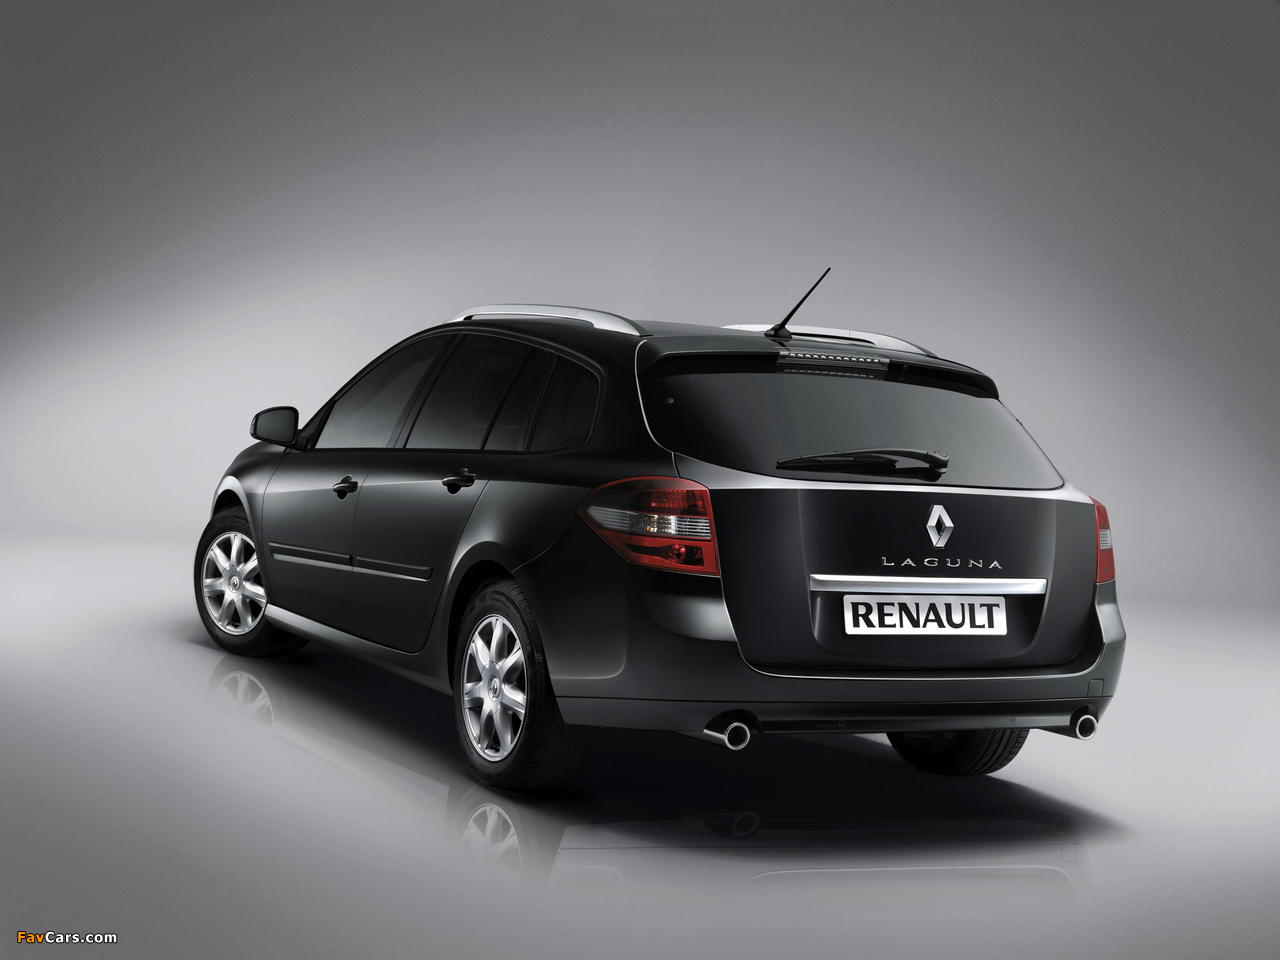 Renault Laguna Grandtour Black Edition 2009 photos (1280 x 960)